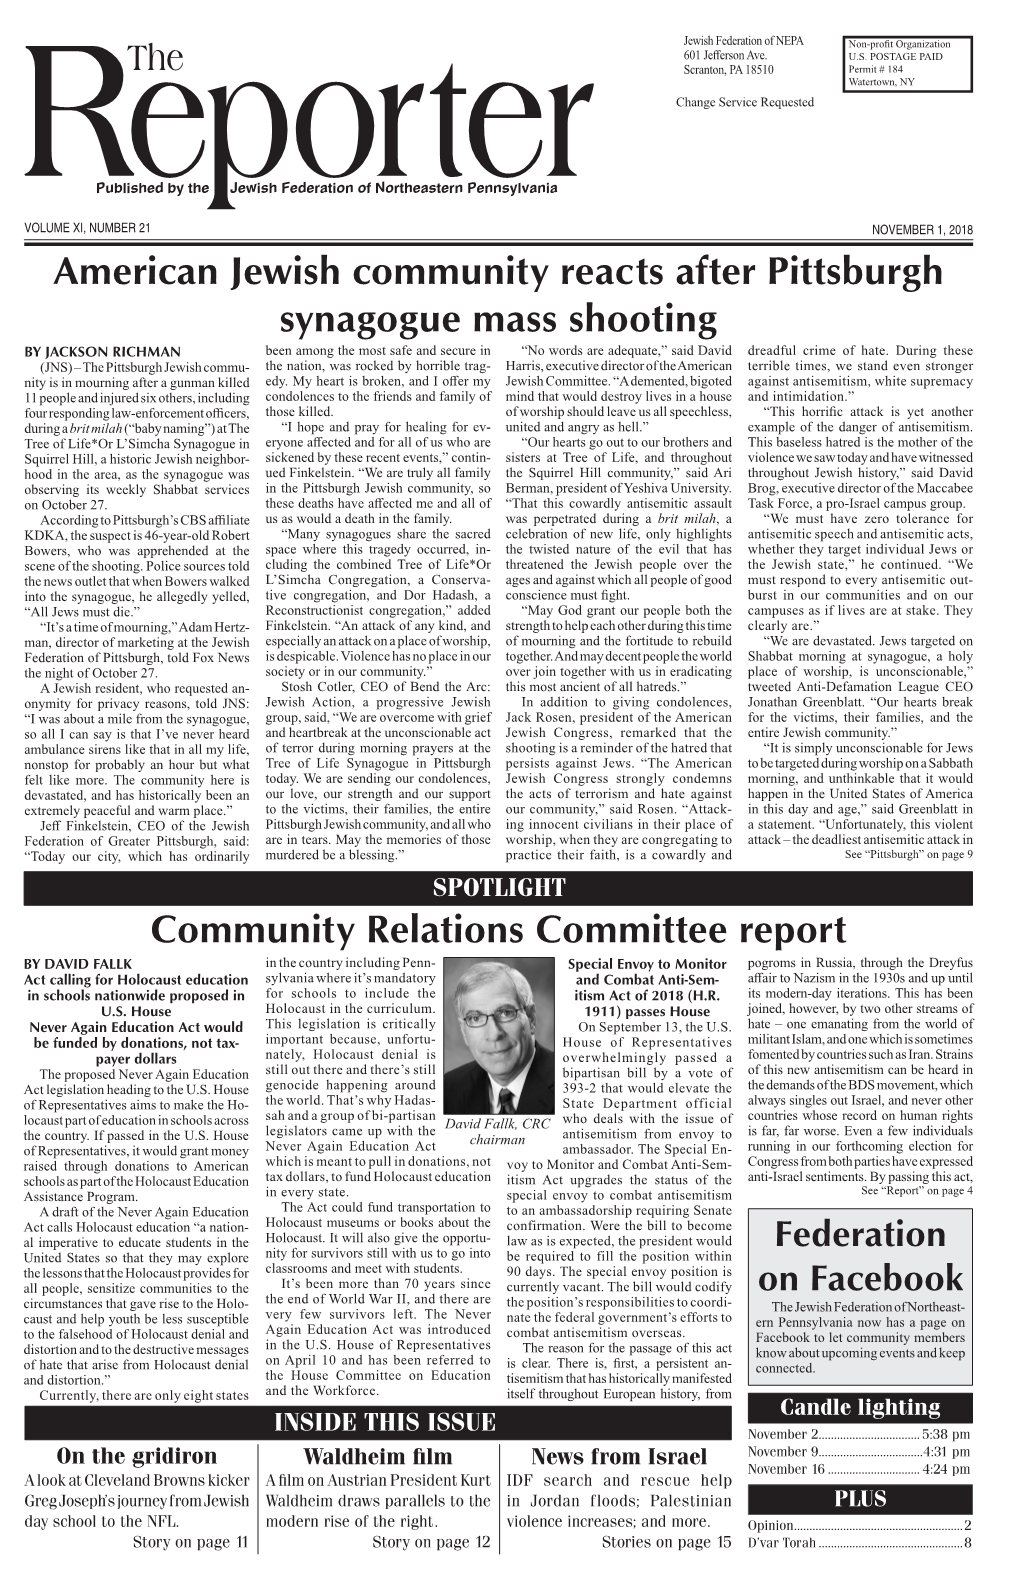 Community Relations Committee Report American Jewish Community